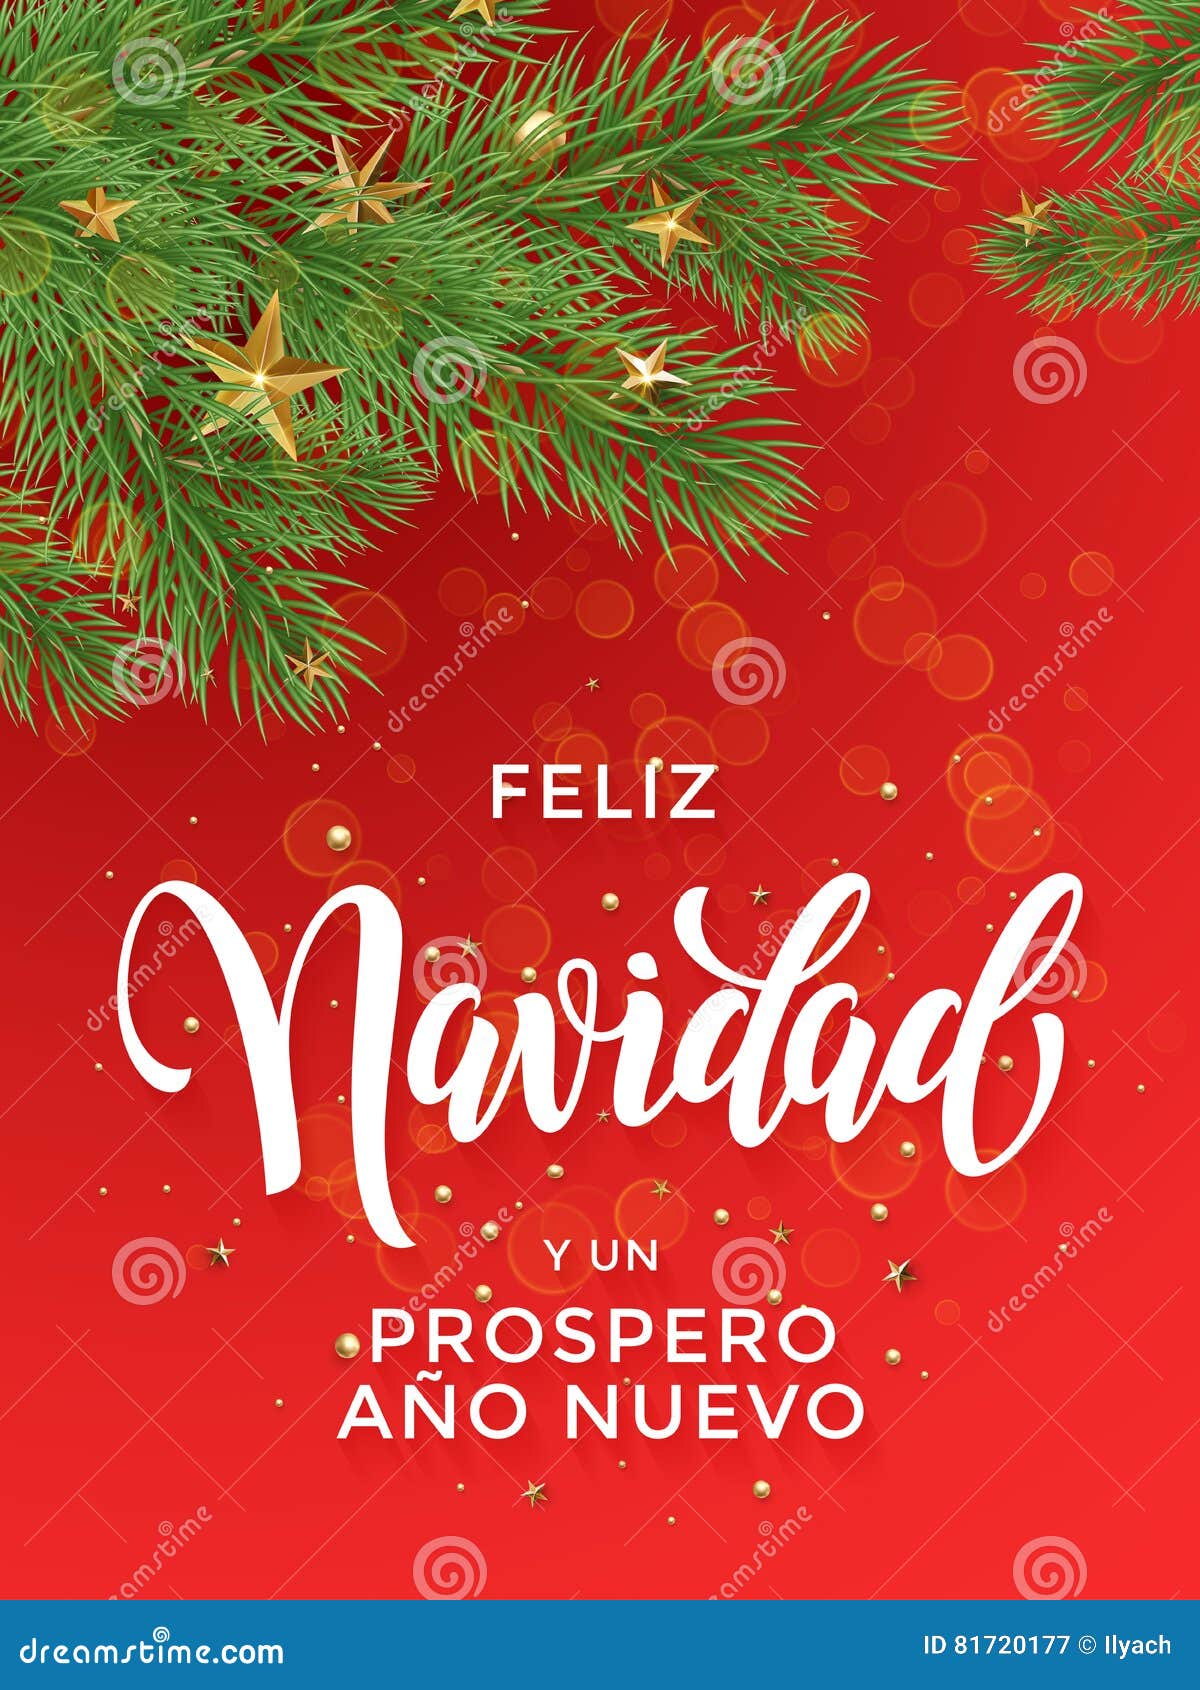 spanish new year feliz ano nuovo greeting card decoration background